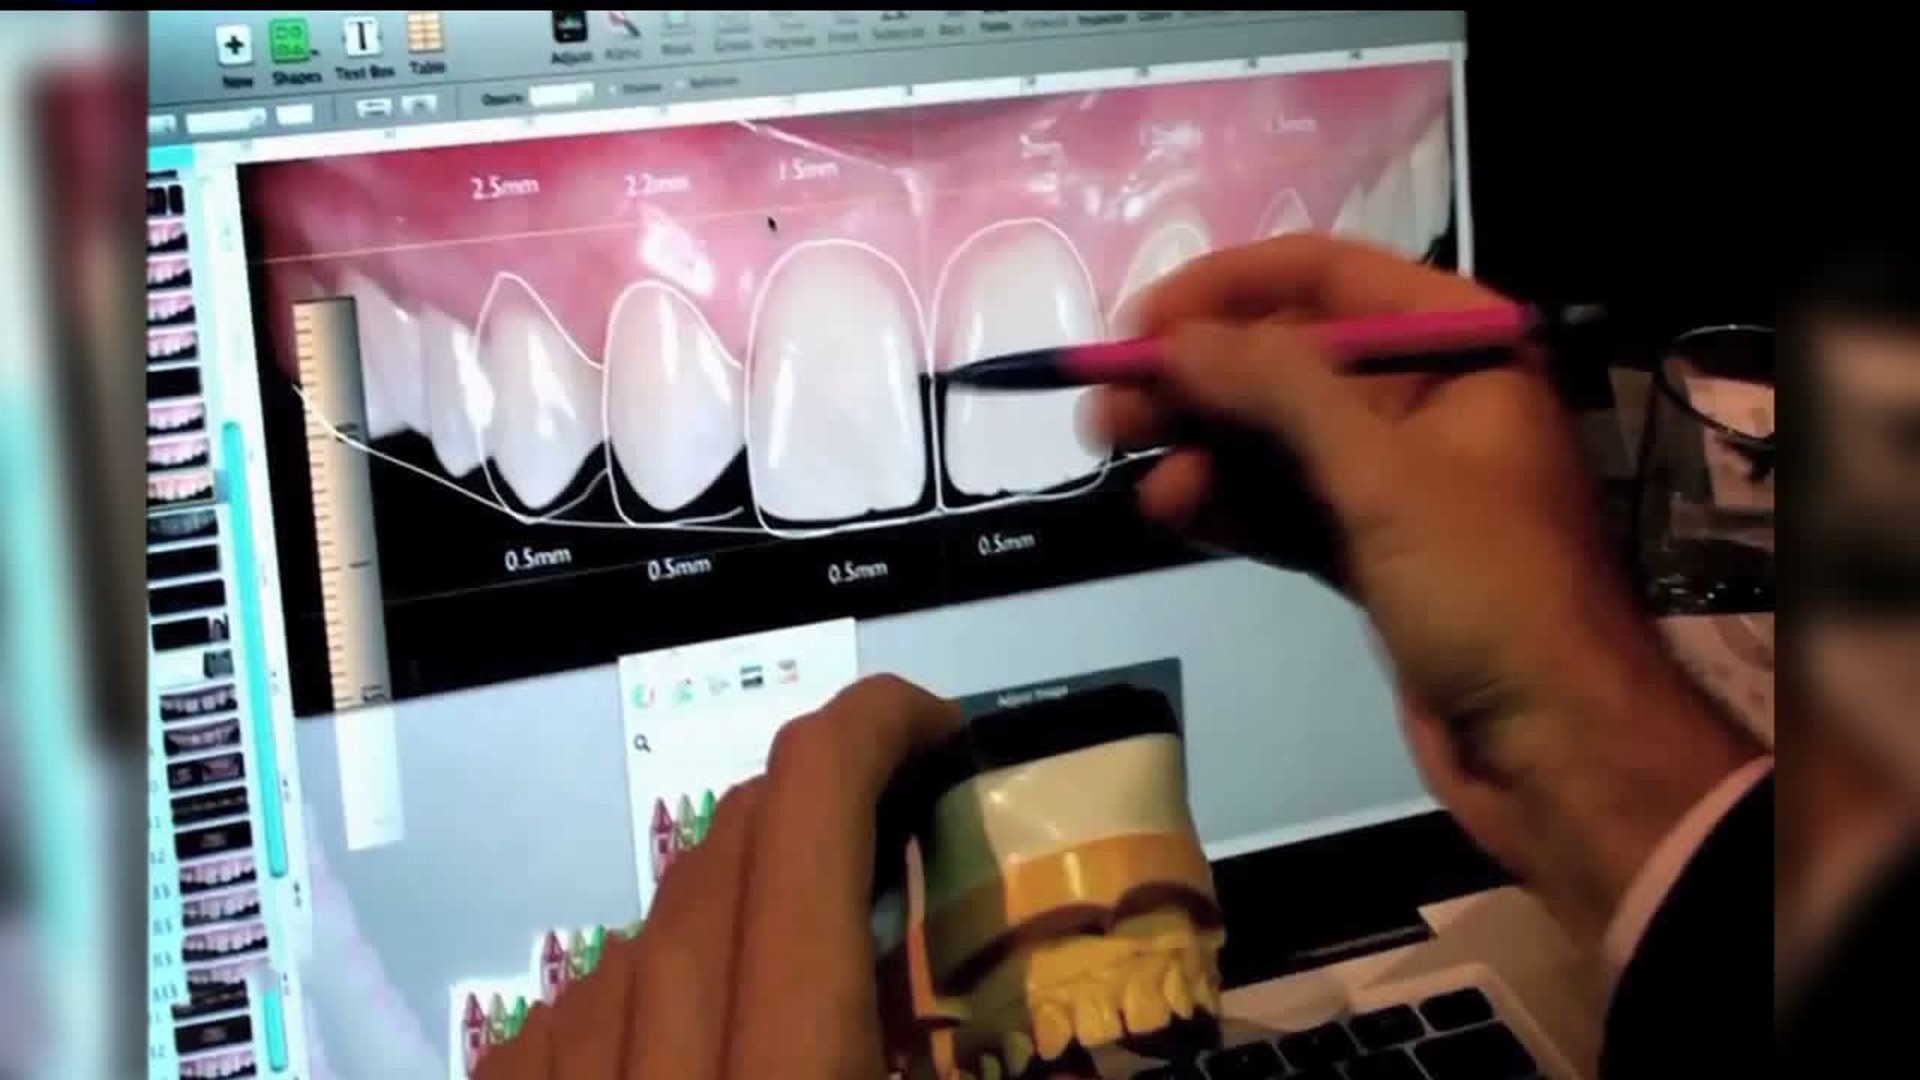 Smilebuilderz helps patients visualize procedure outcomes with Digital Smile Design